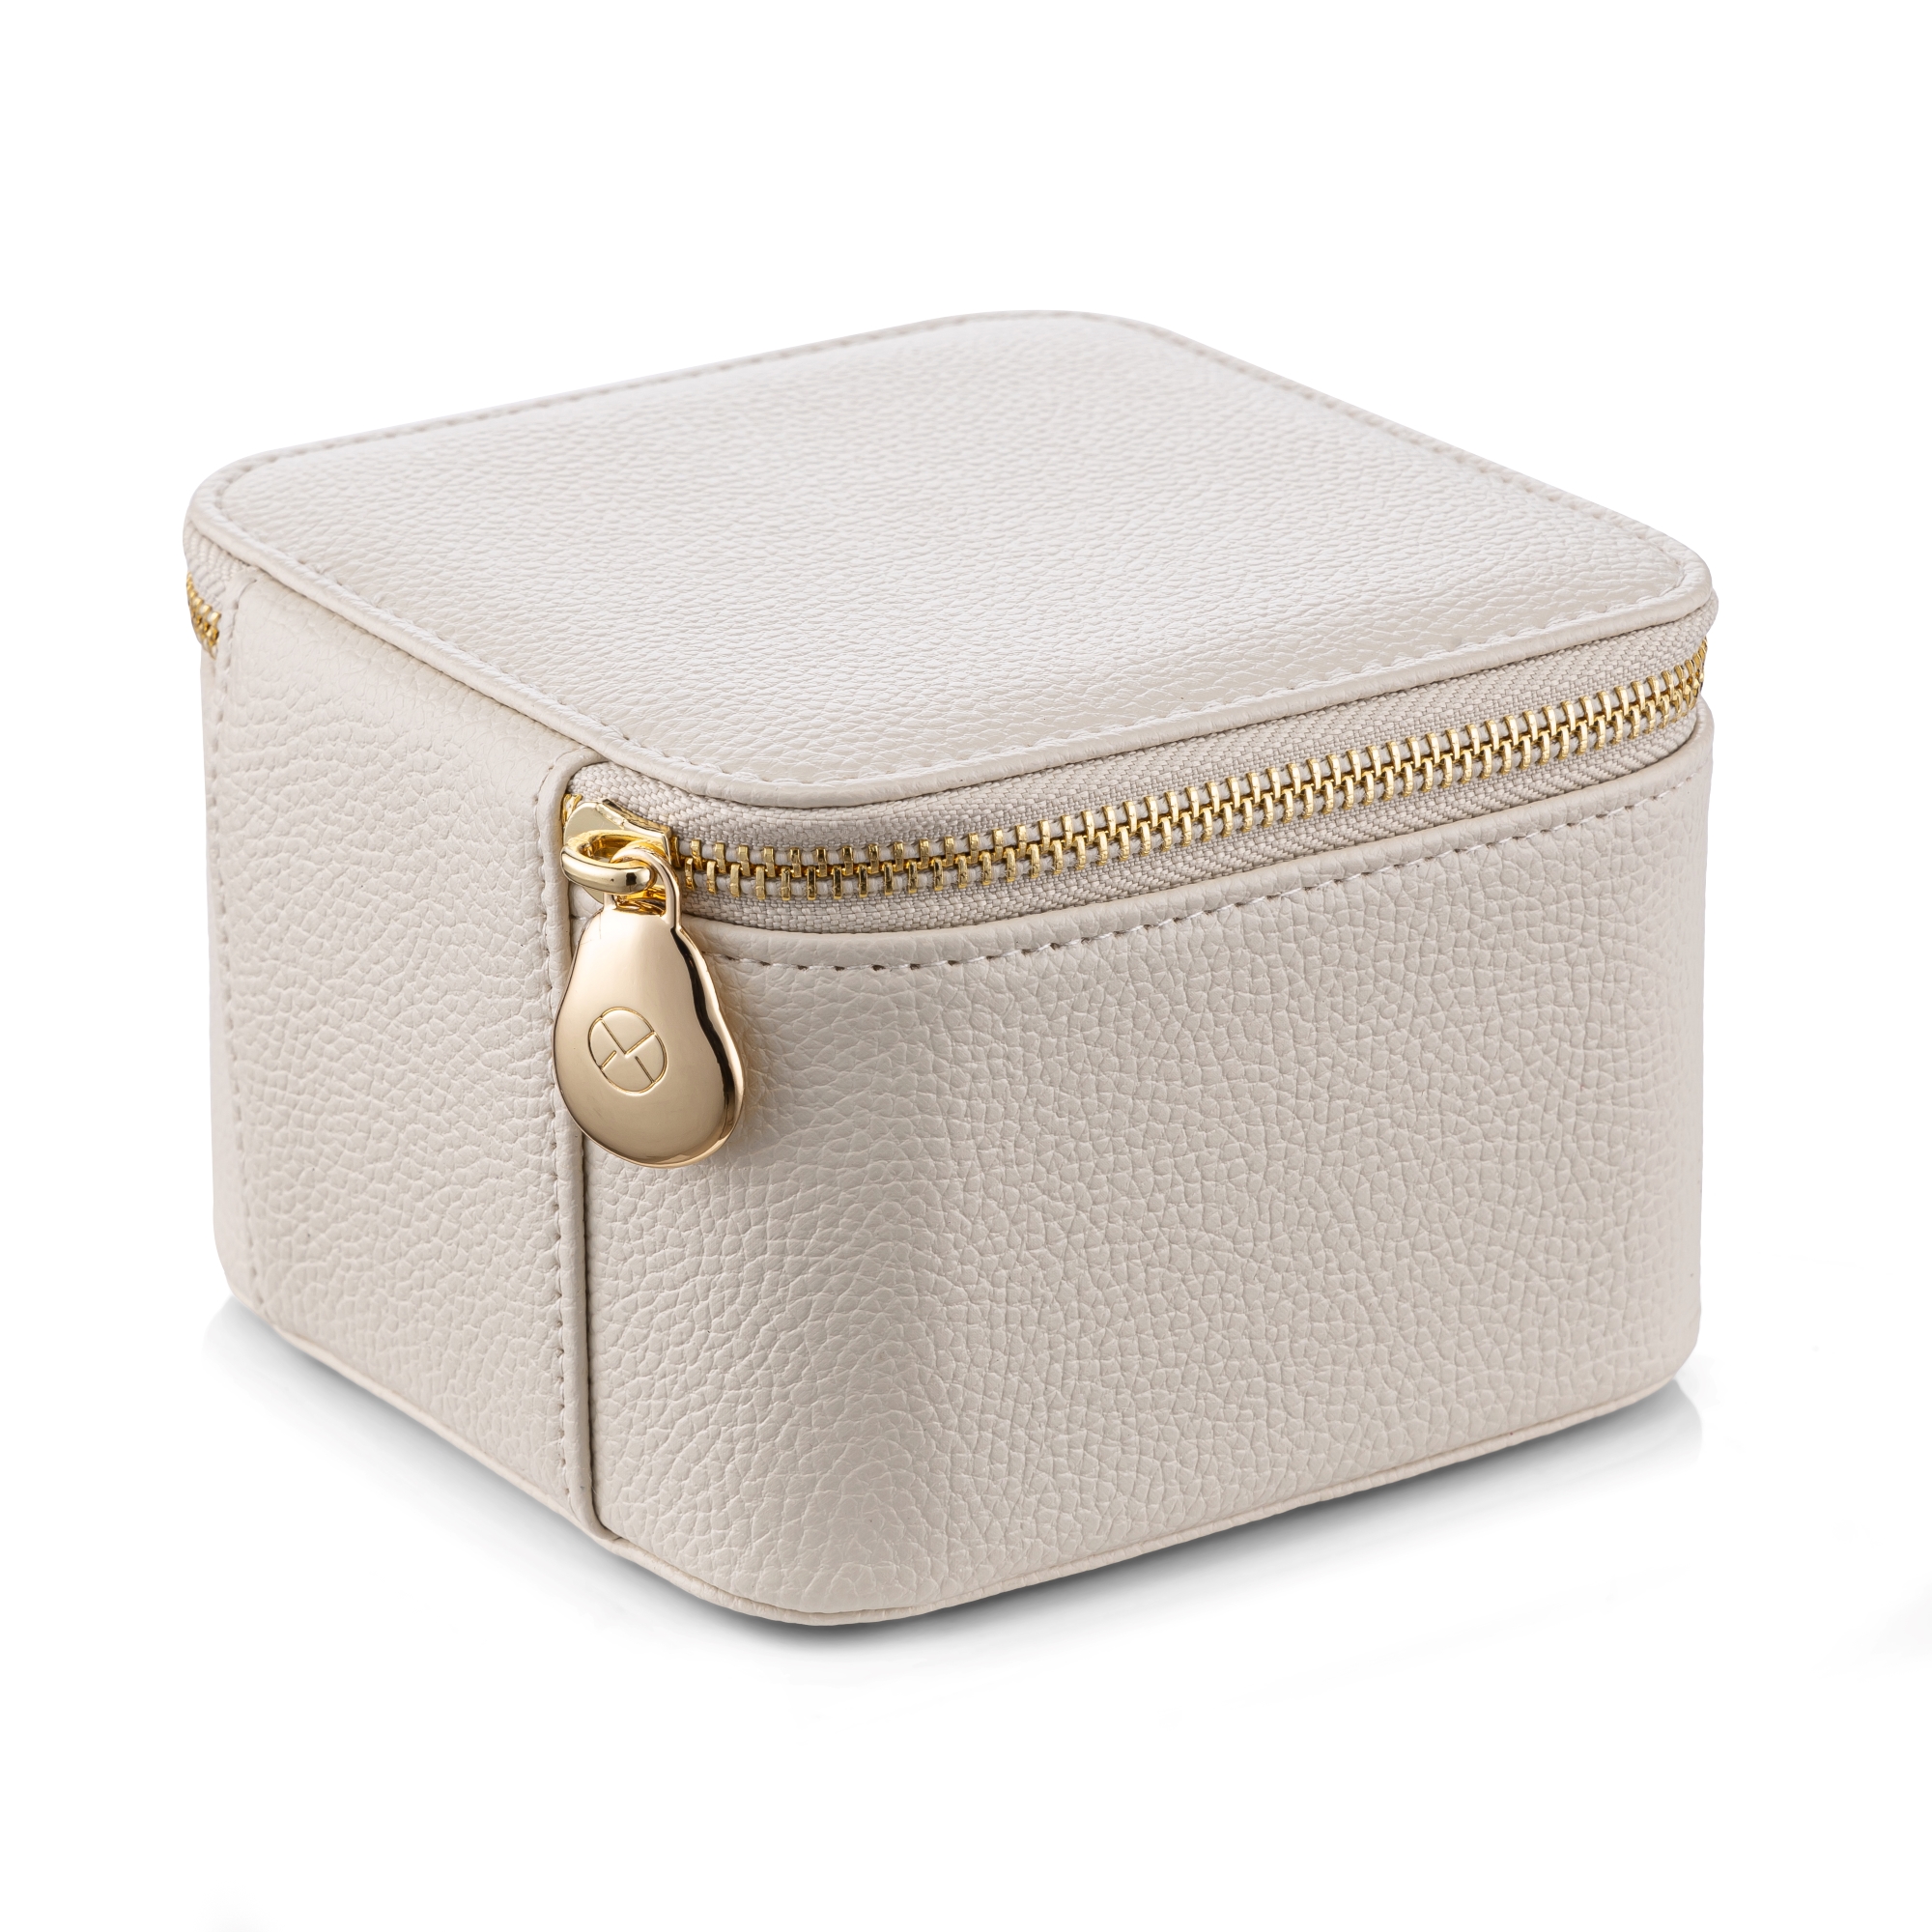 BTSKY Jewelry Roll Up Bag Travel Organizer With Zipper Compartments -  Velvet Jewelry Pouch Storage - Zen Merchandiser